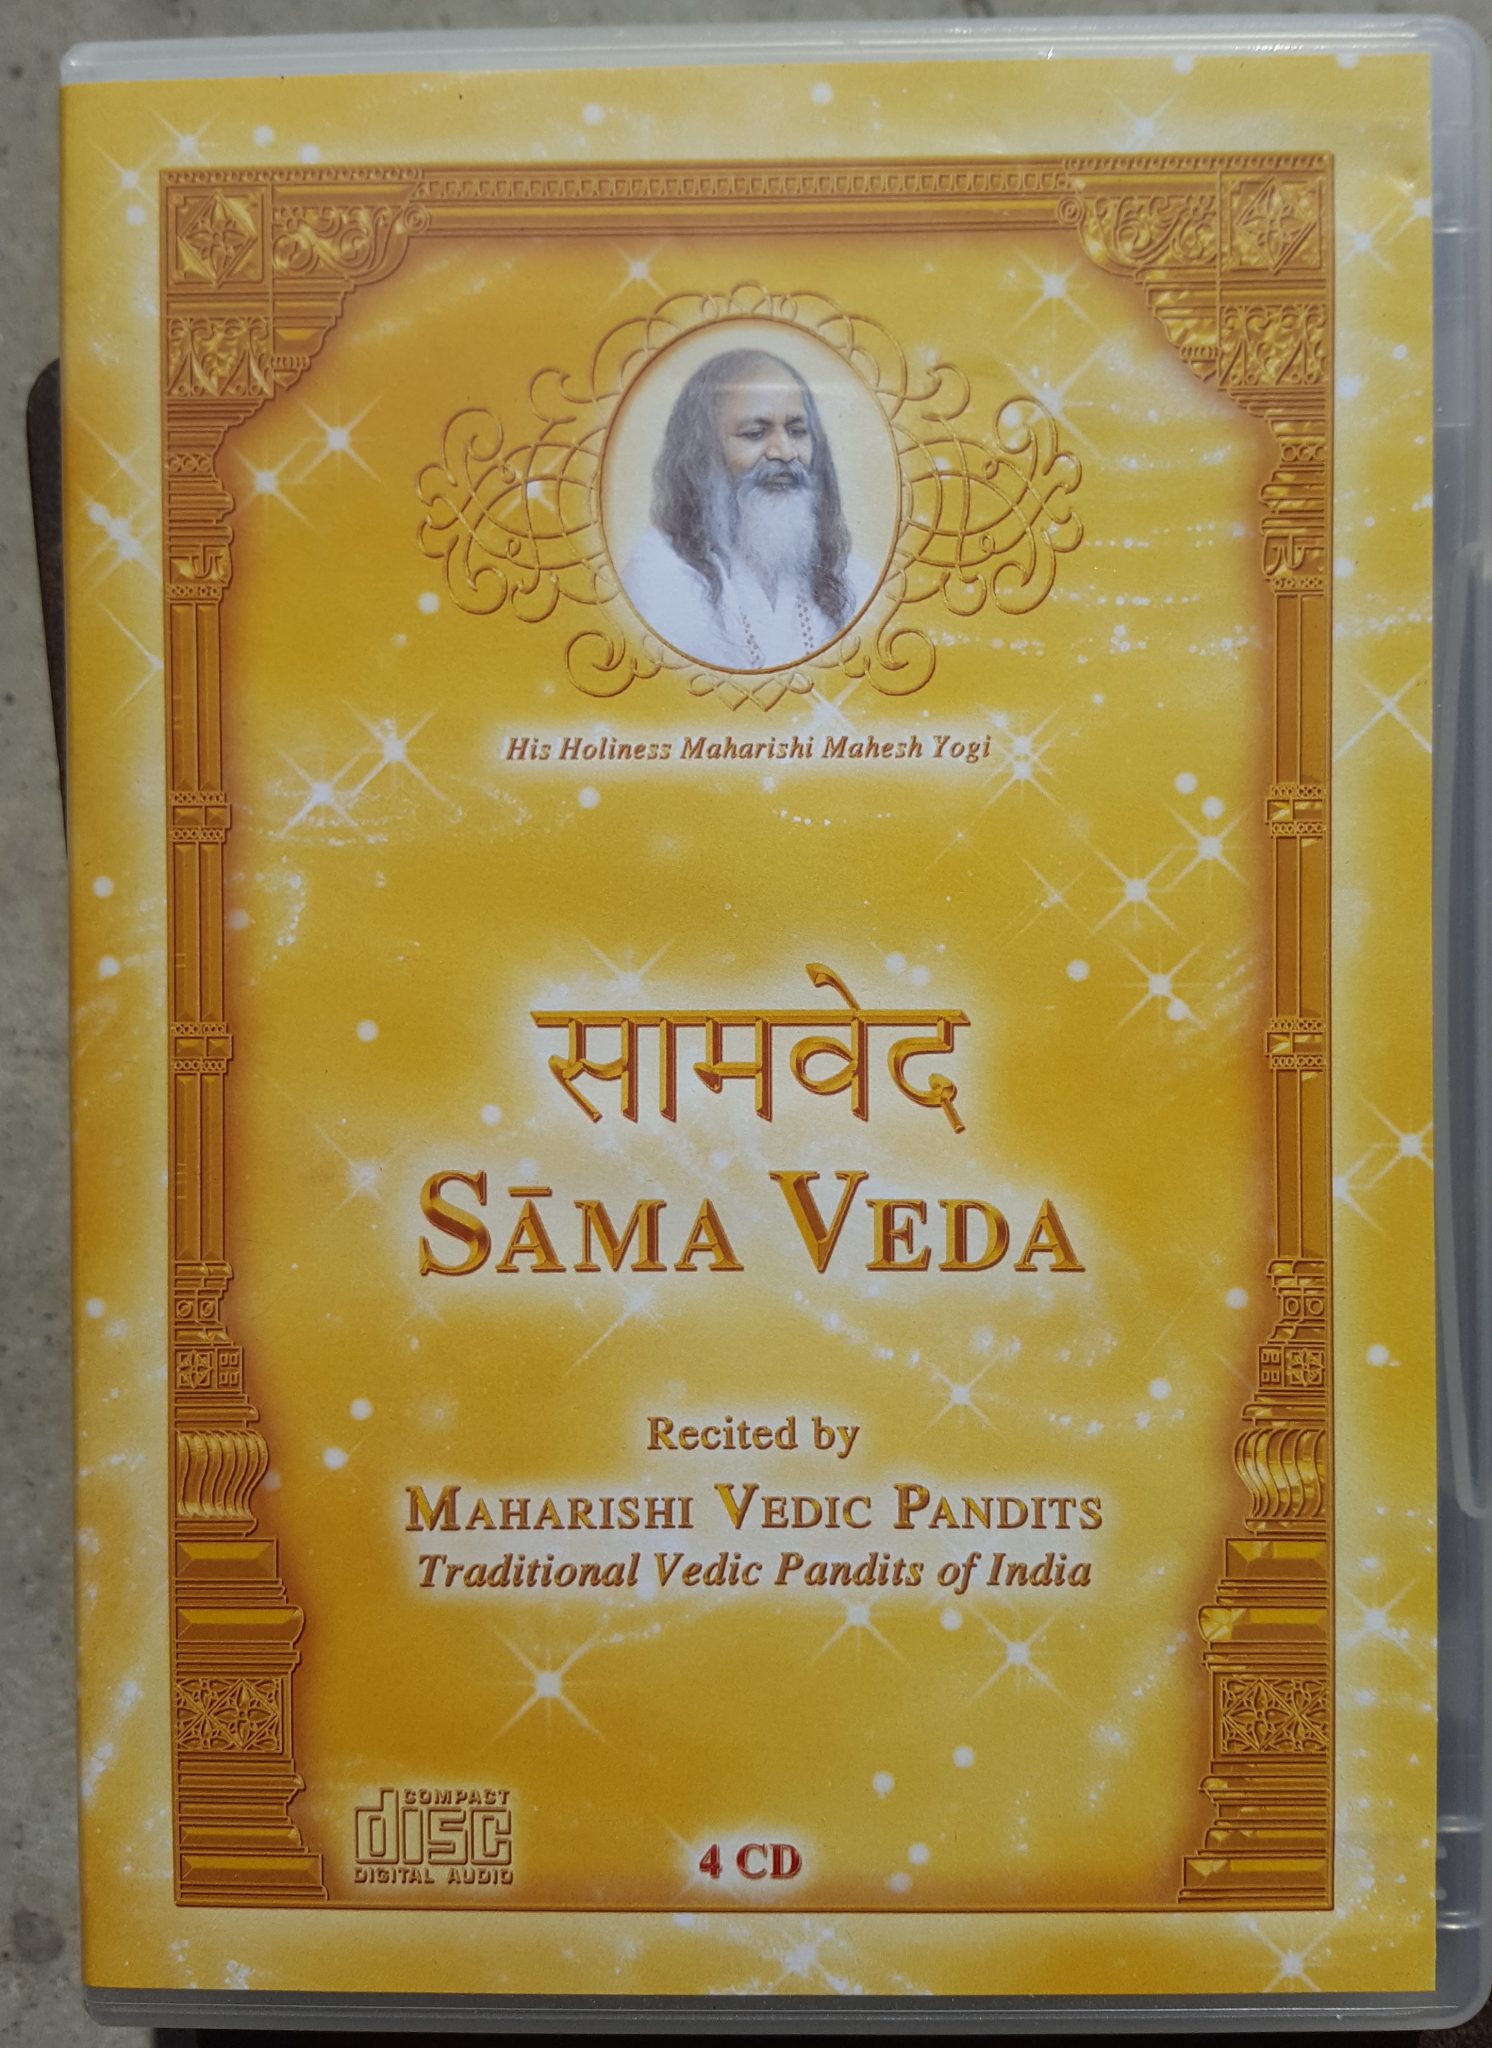 information about sama veda